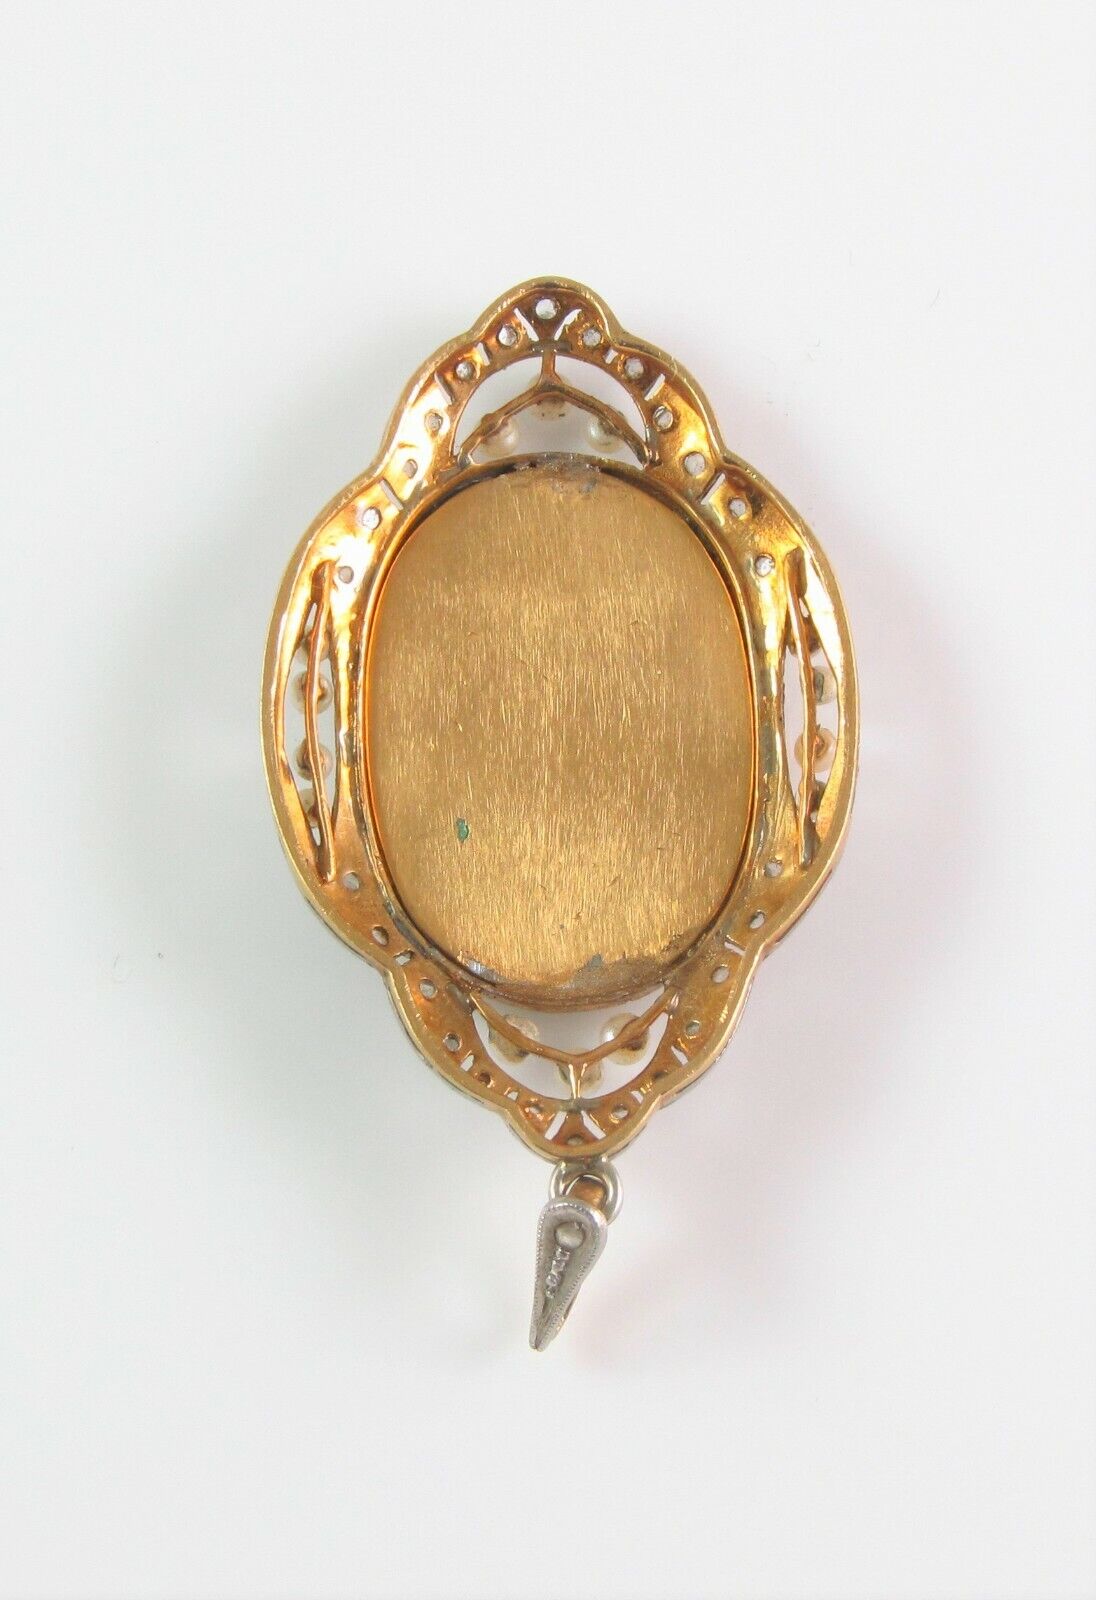 Antique 18K Gold & Platinum Enamel Diamond & Pearl Religious Virgin Mary Pendant